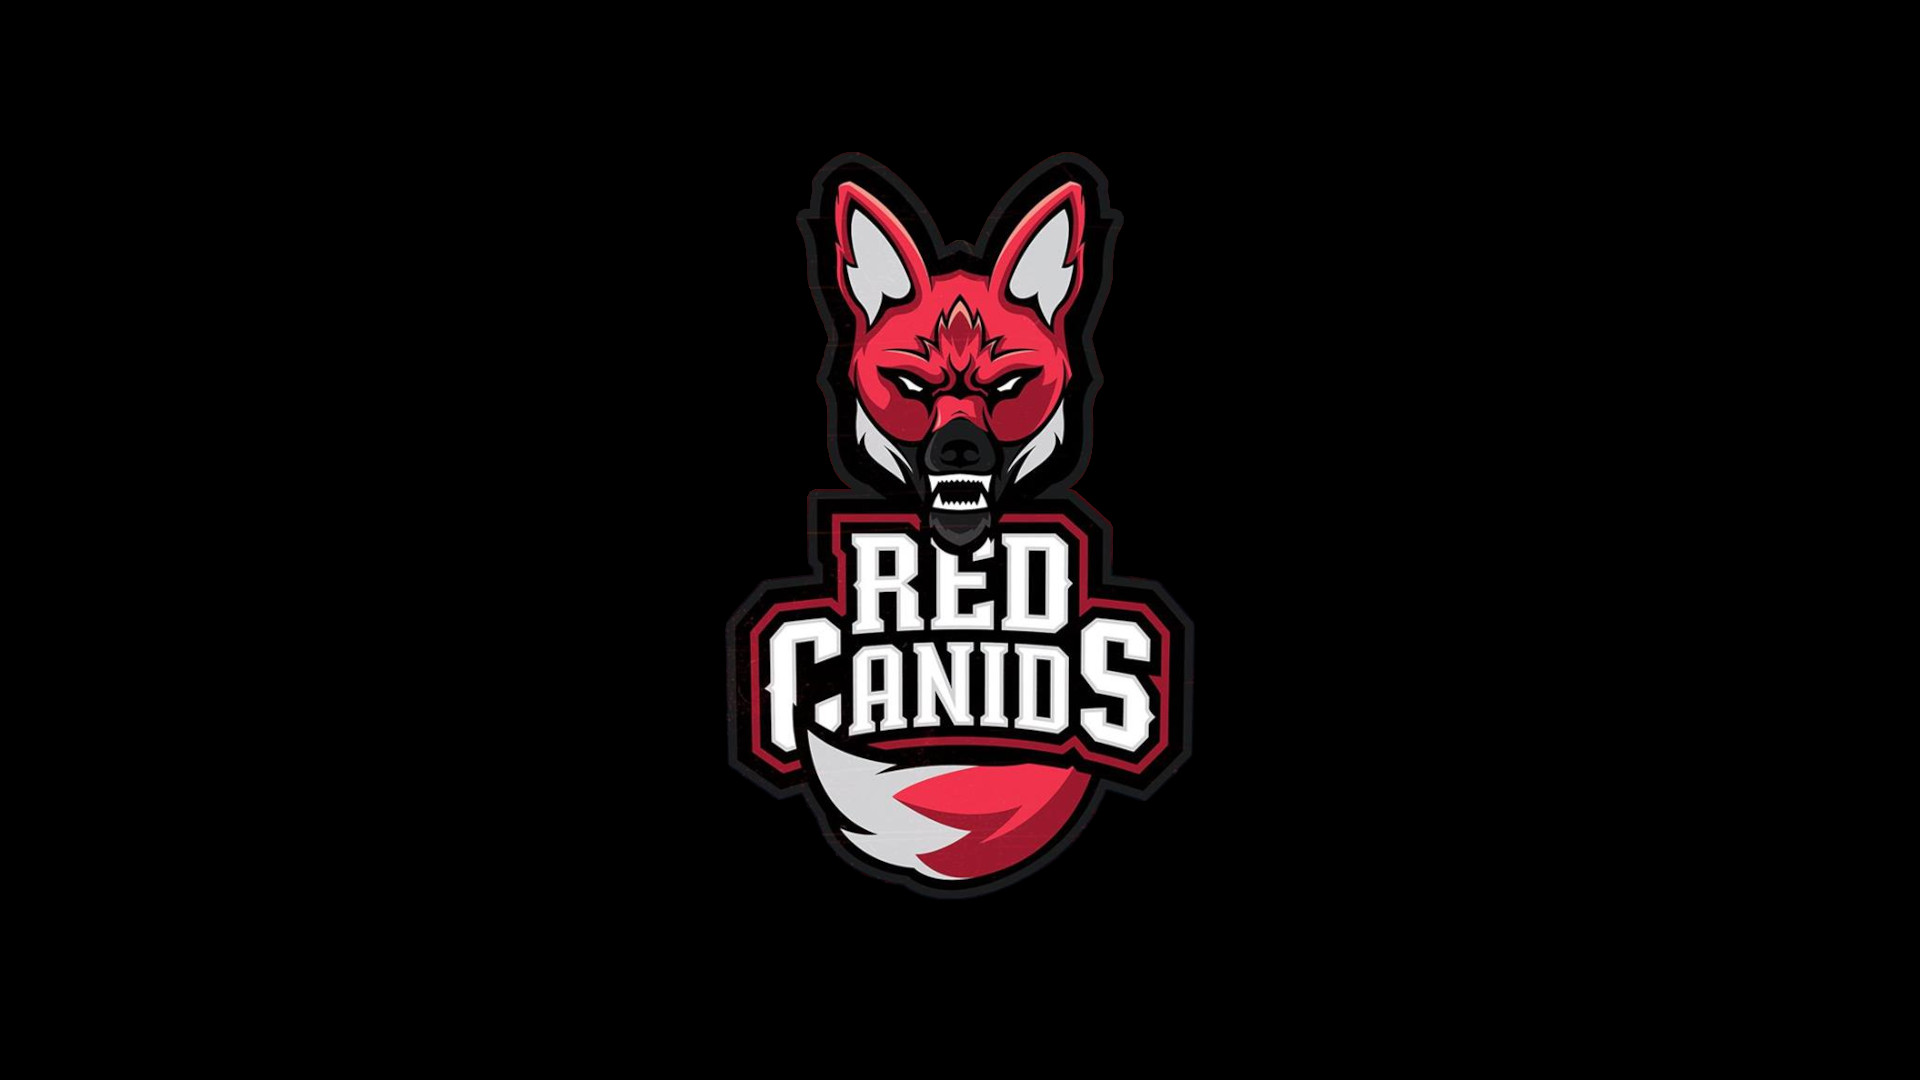 RED Canids vence as qualificações 2022 do Honor of Kings International Championship Brazil